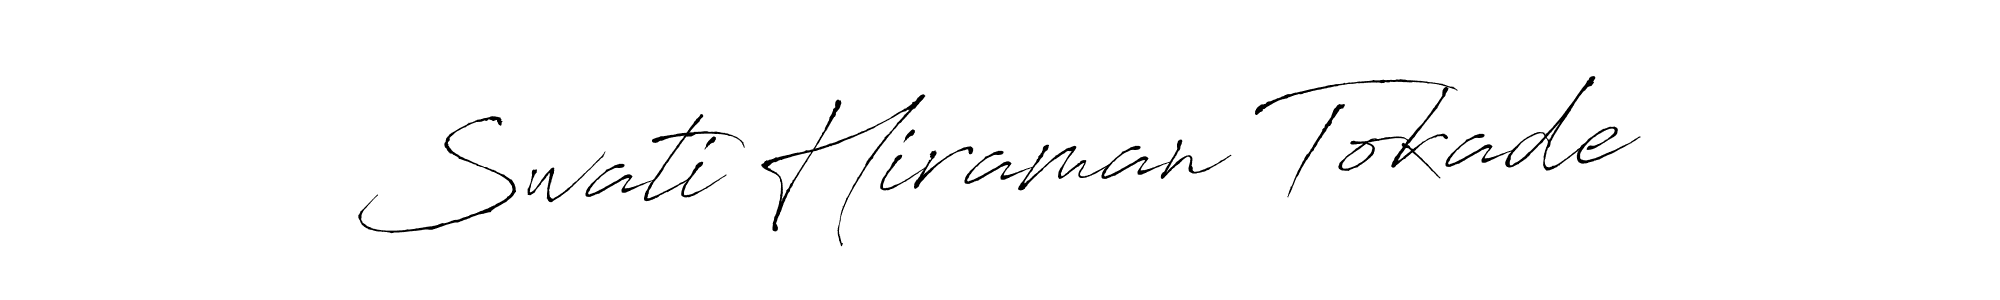 How to Draw Swati Hiraman Tokade signature style? Antro_Vectra is a latest design signature styles for name Swati Hiraman Tokade. Swati Hiraman Tokade signature style 6 images and pictures png